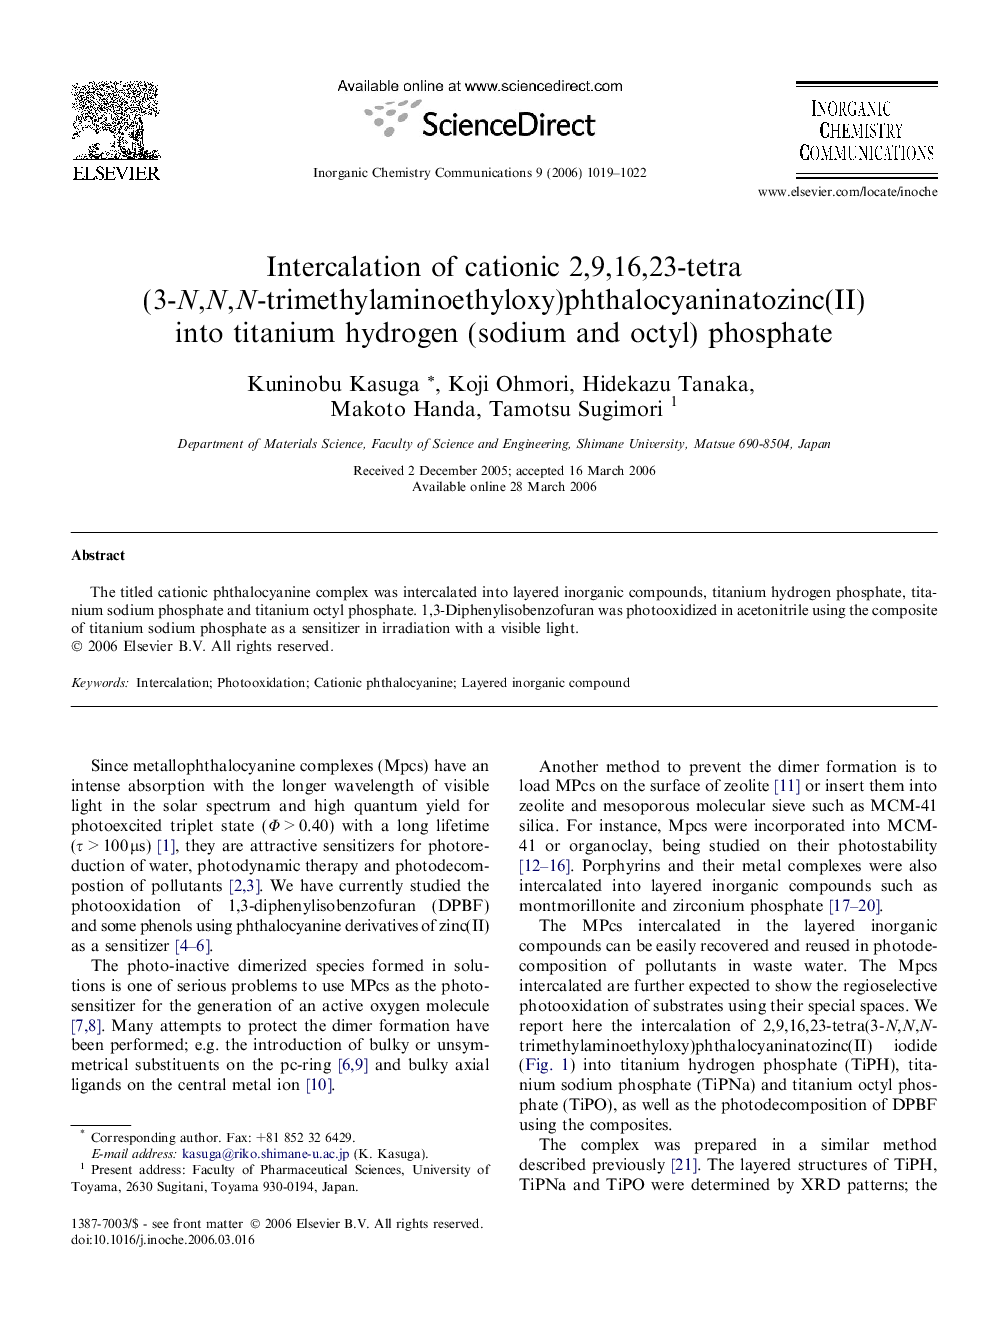 Intercalation of cationic 2,9,16,23-tetra(3-N,N,N-trimethylaminoethyloxy)phthalocyaninatozinc(II) into titanium hydrogen (sodium and octyl) phosphate